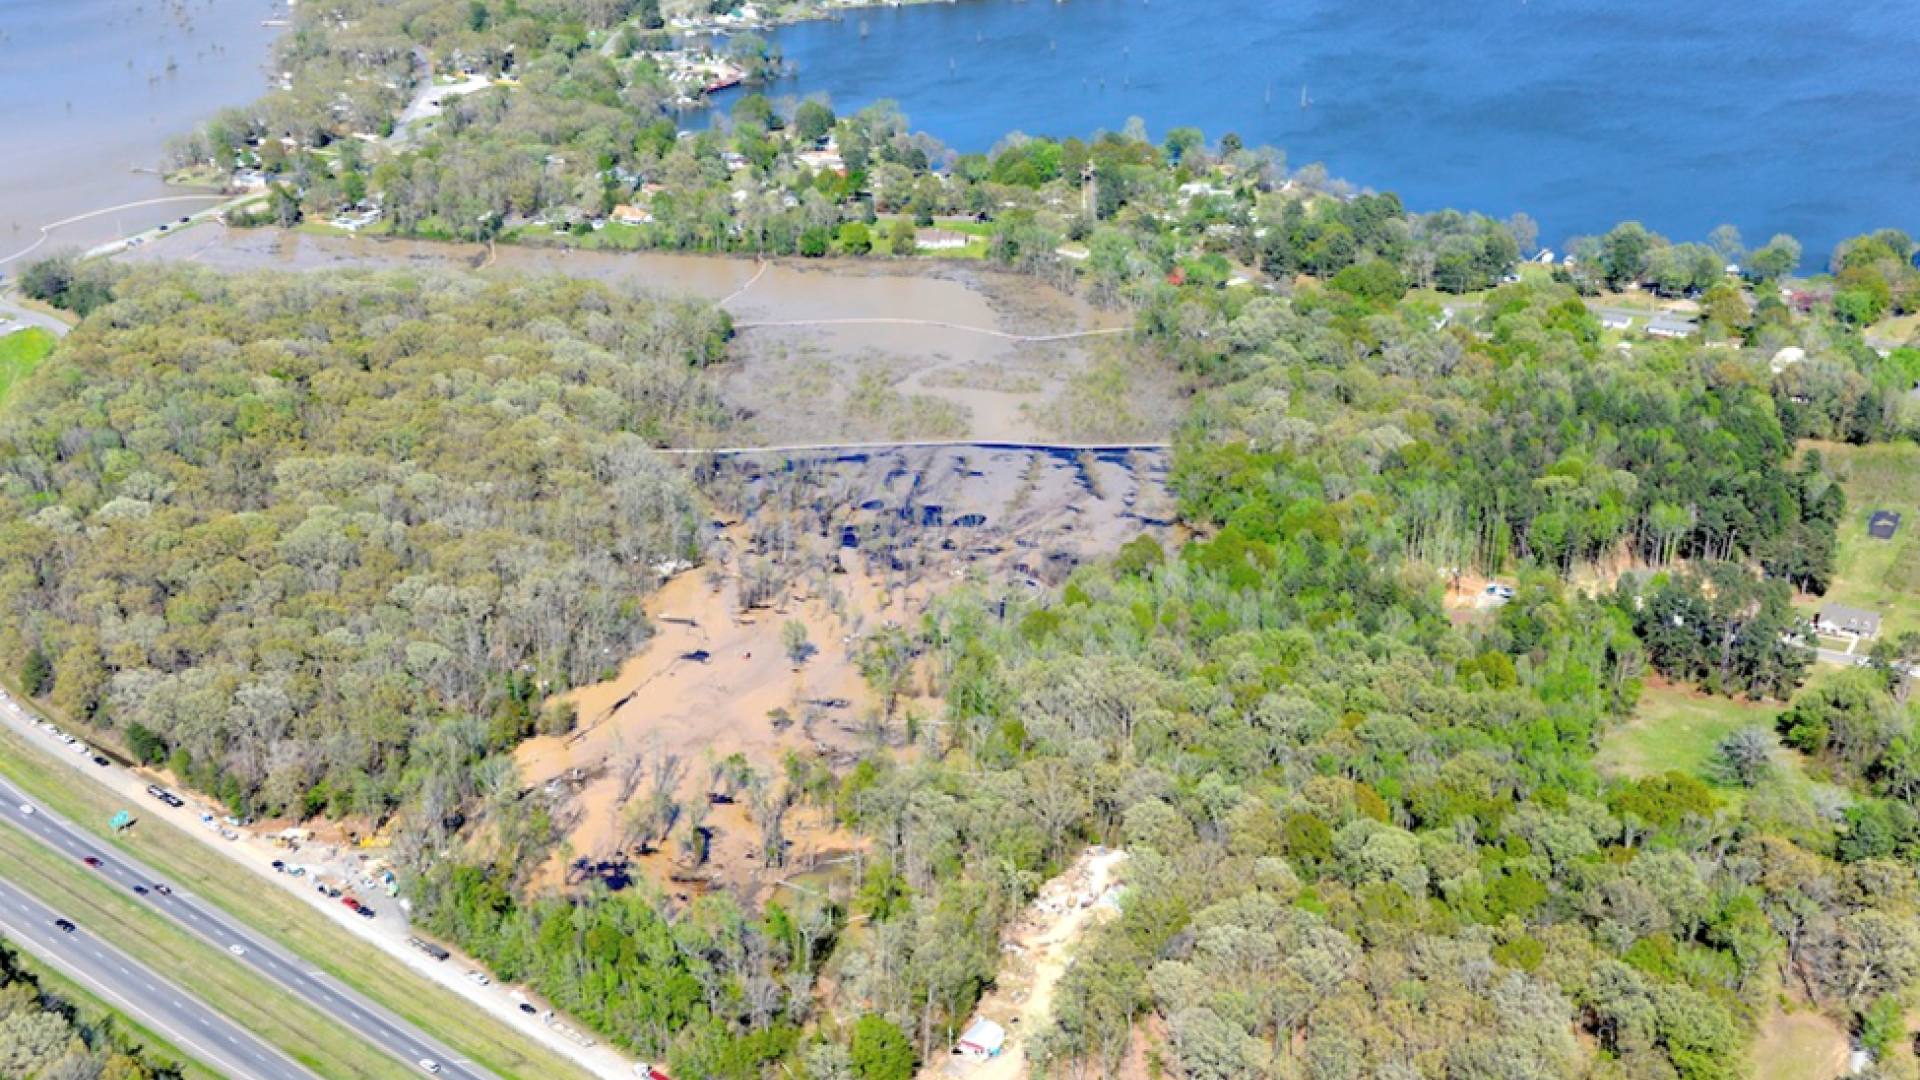 ORDA Aerial view of Mayflower Pegasus Pipeline Spill